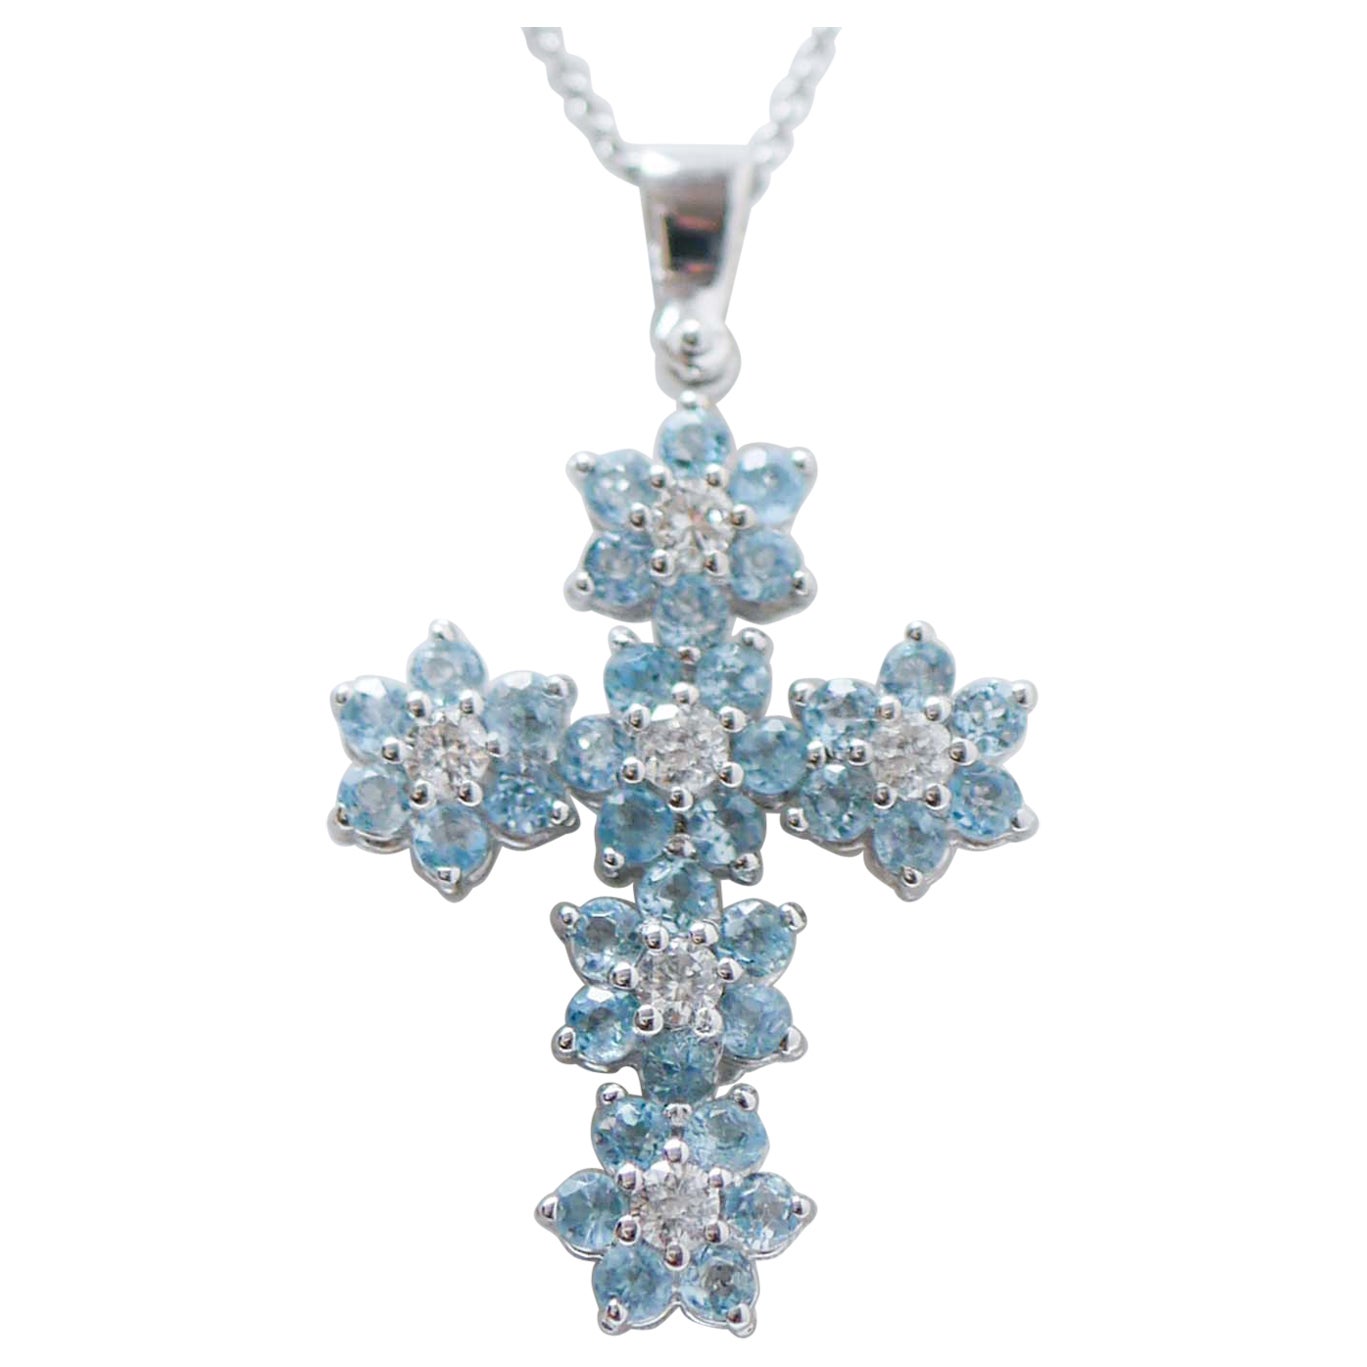 Aquamarine, Diamonds, 18 Karat White Gold Pendant Necklace.